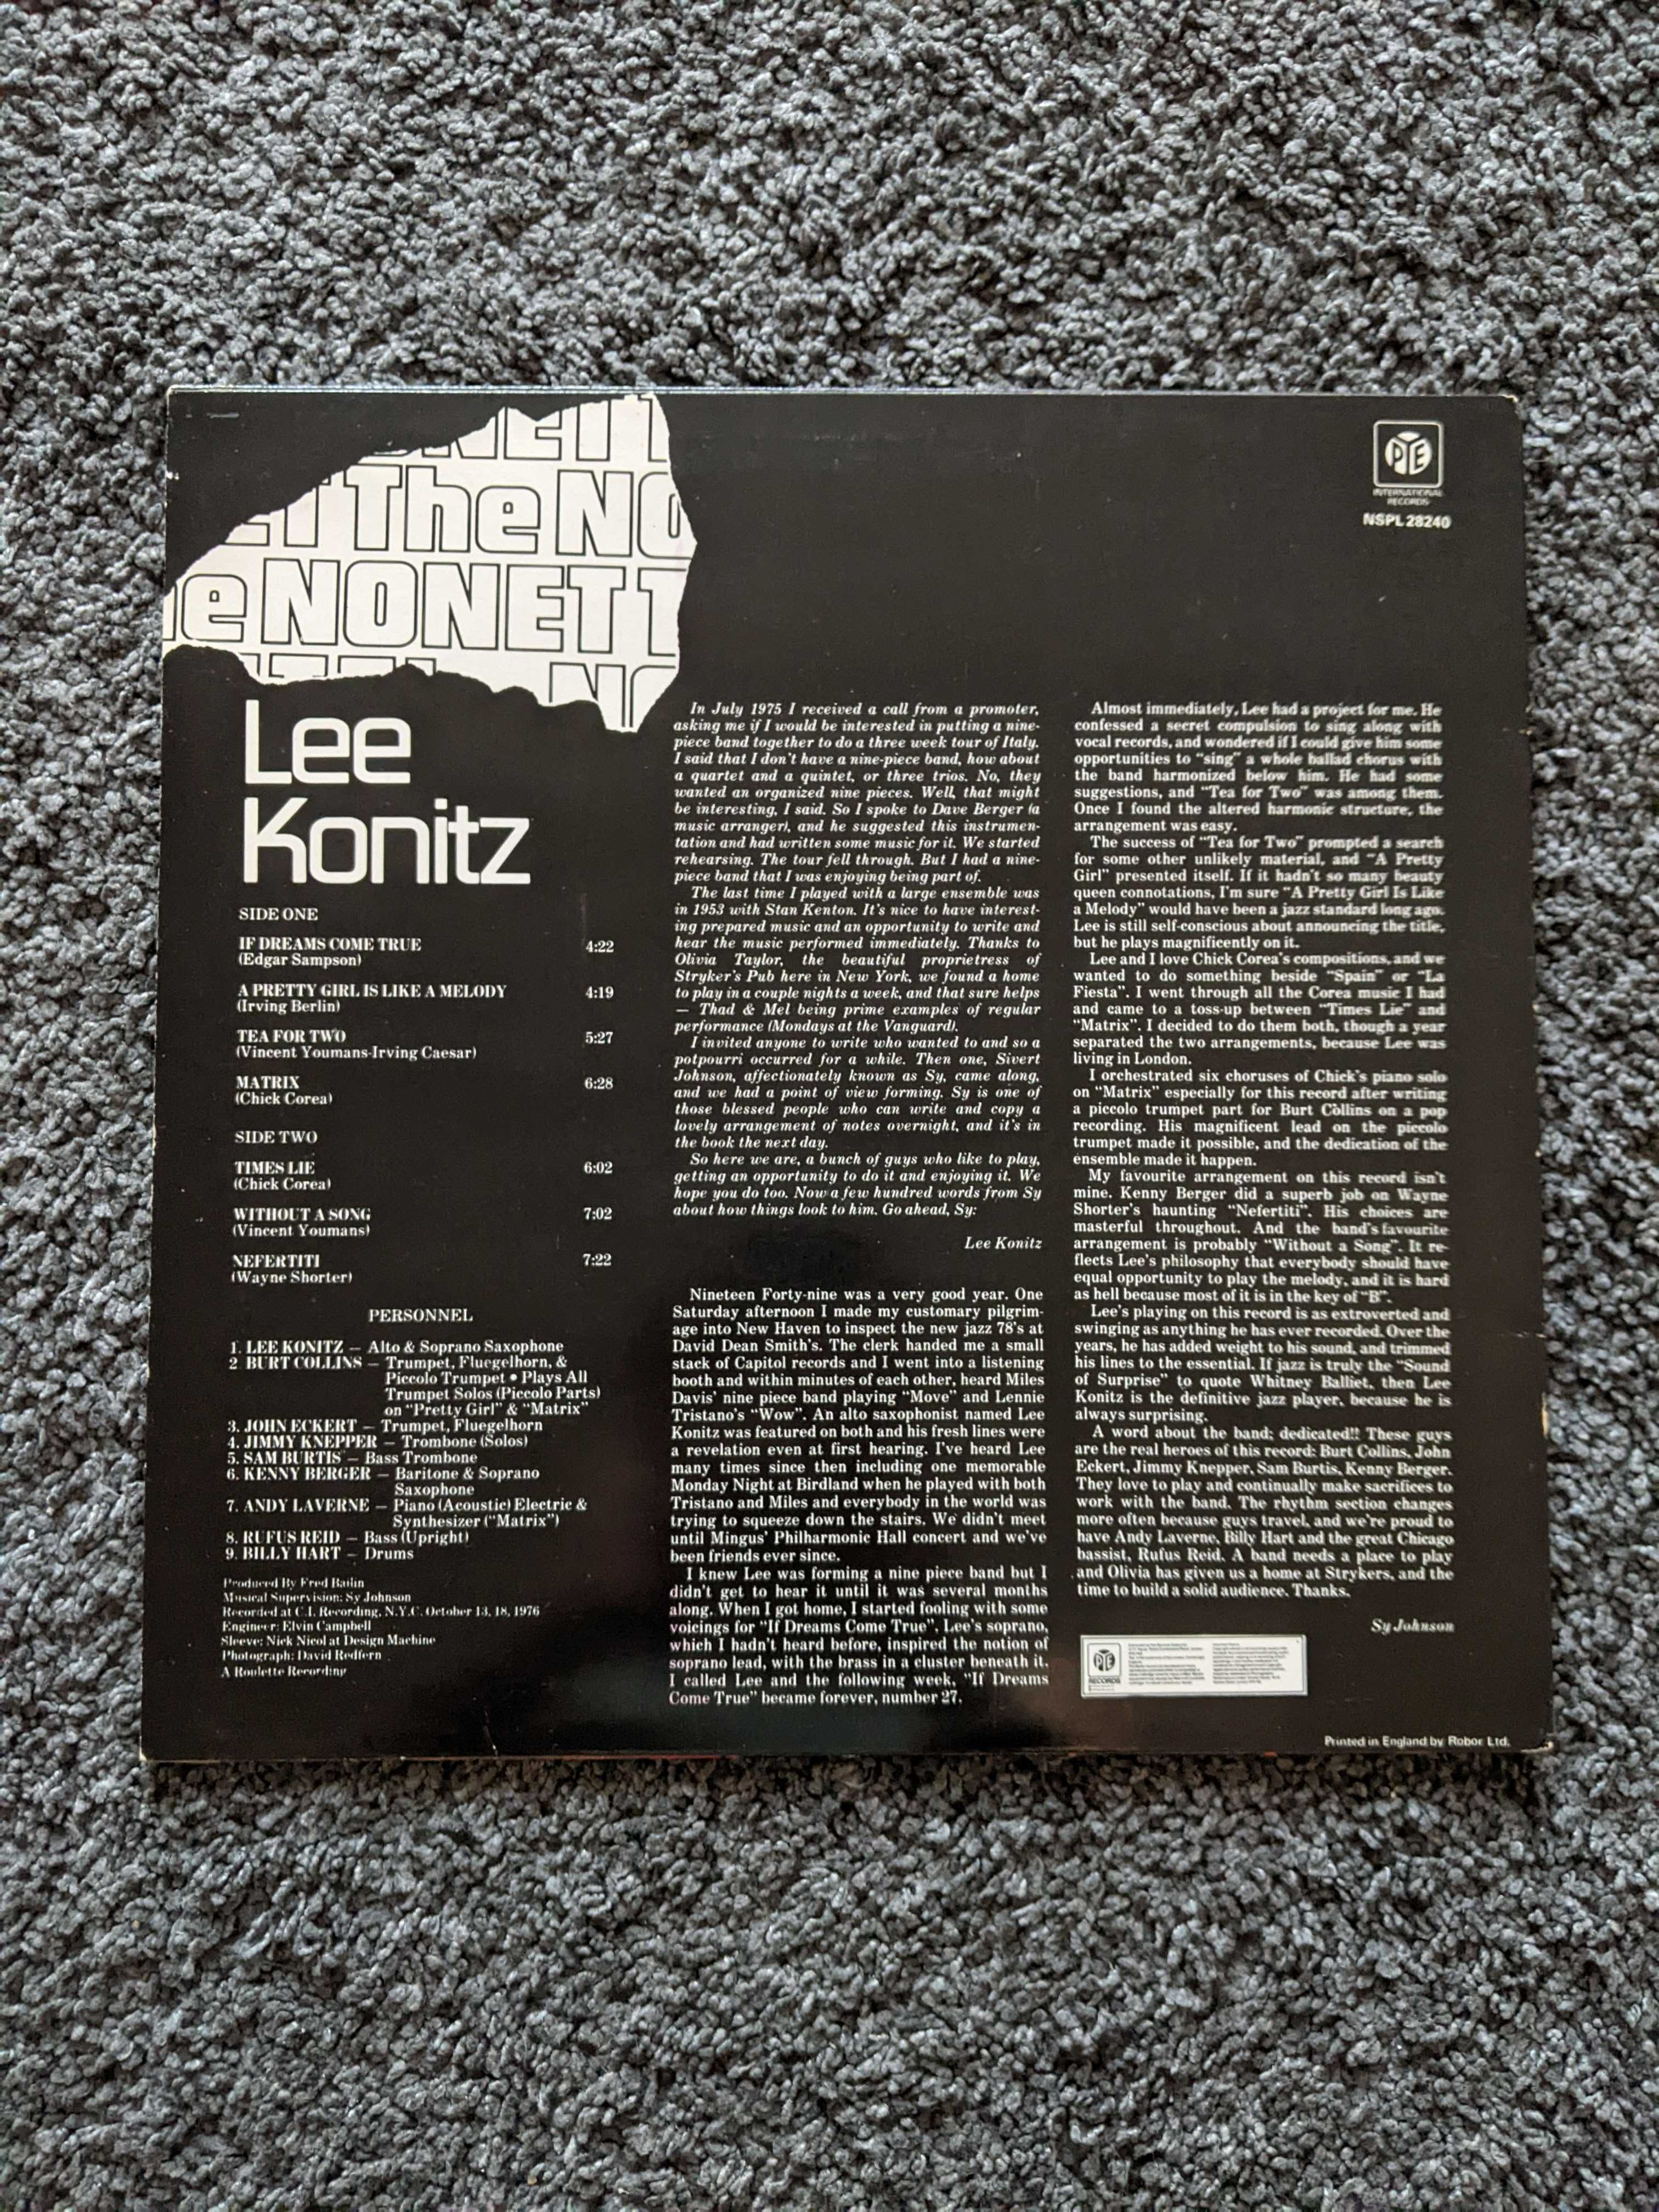 Lee Konitz - The Nonet (Vinyl, Jazz, White label, LP)